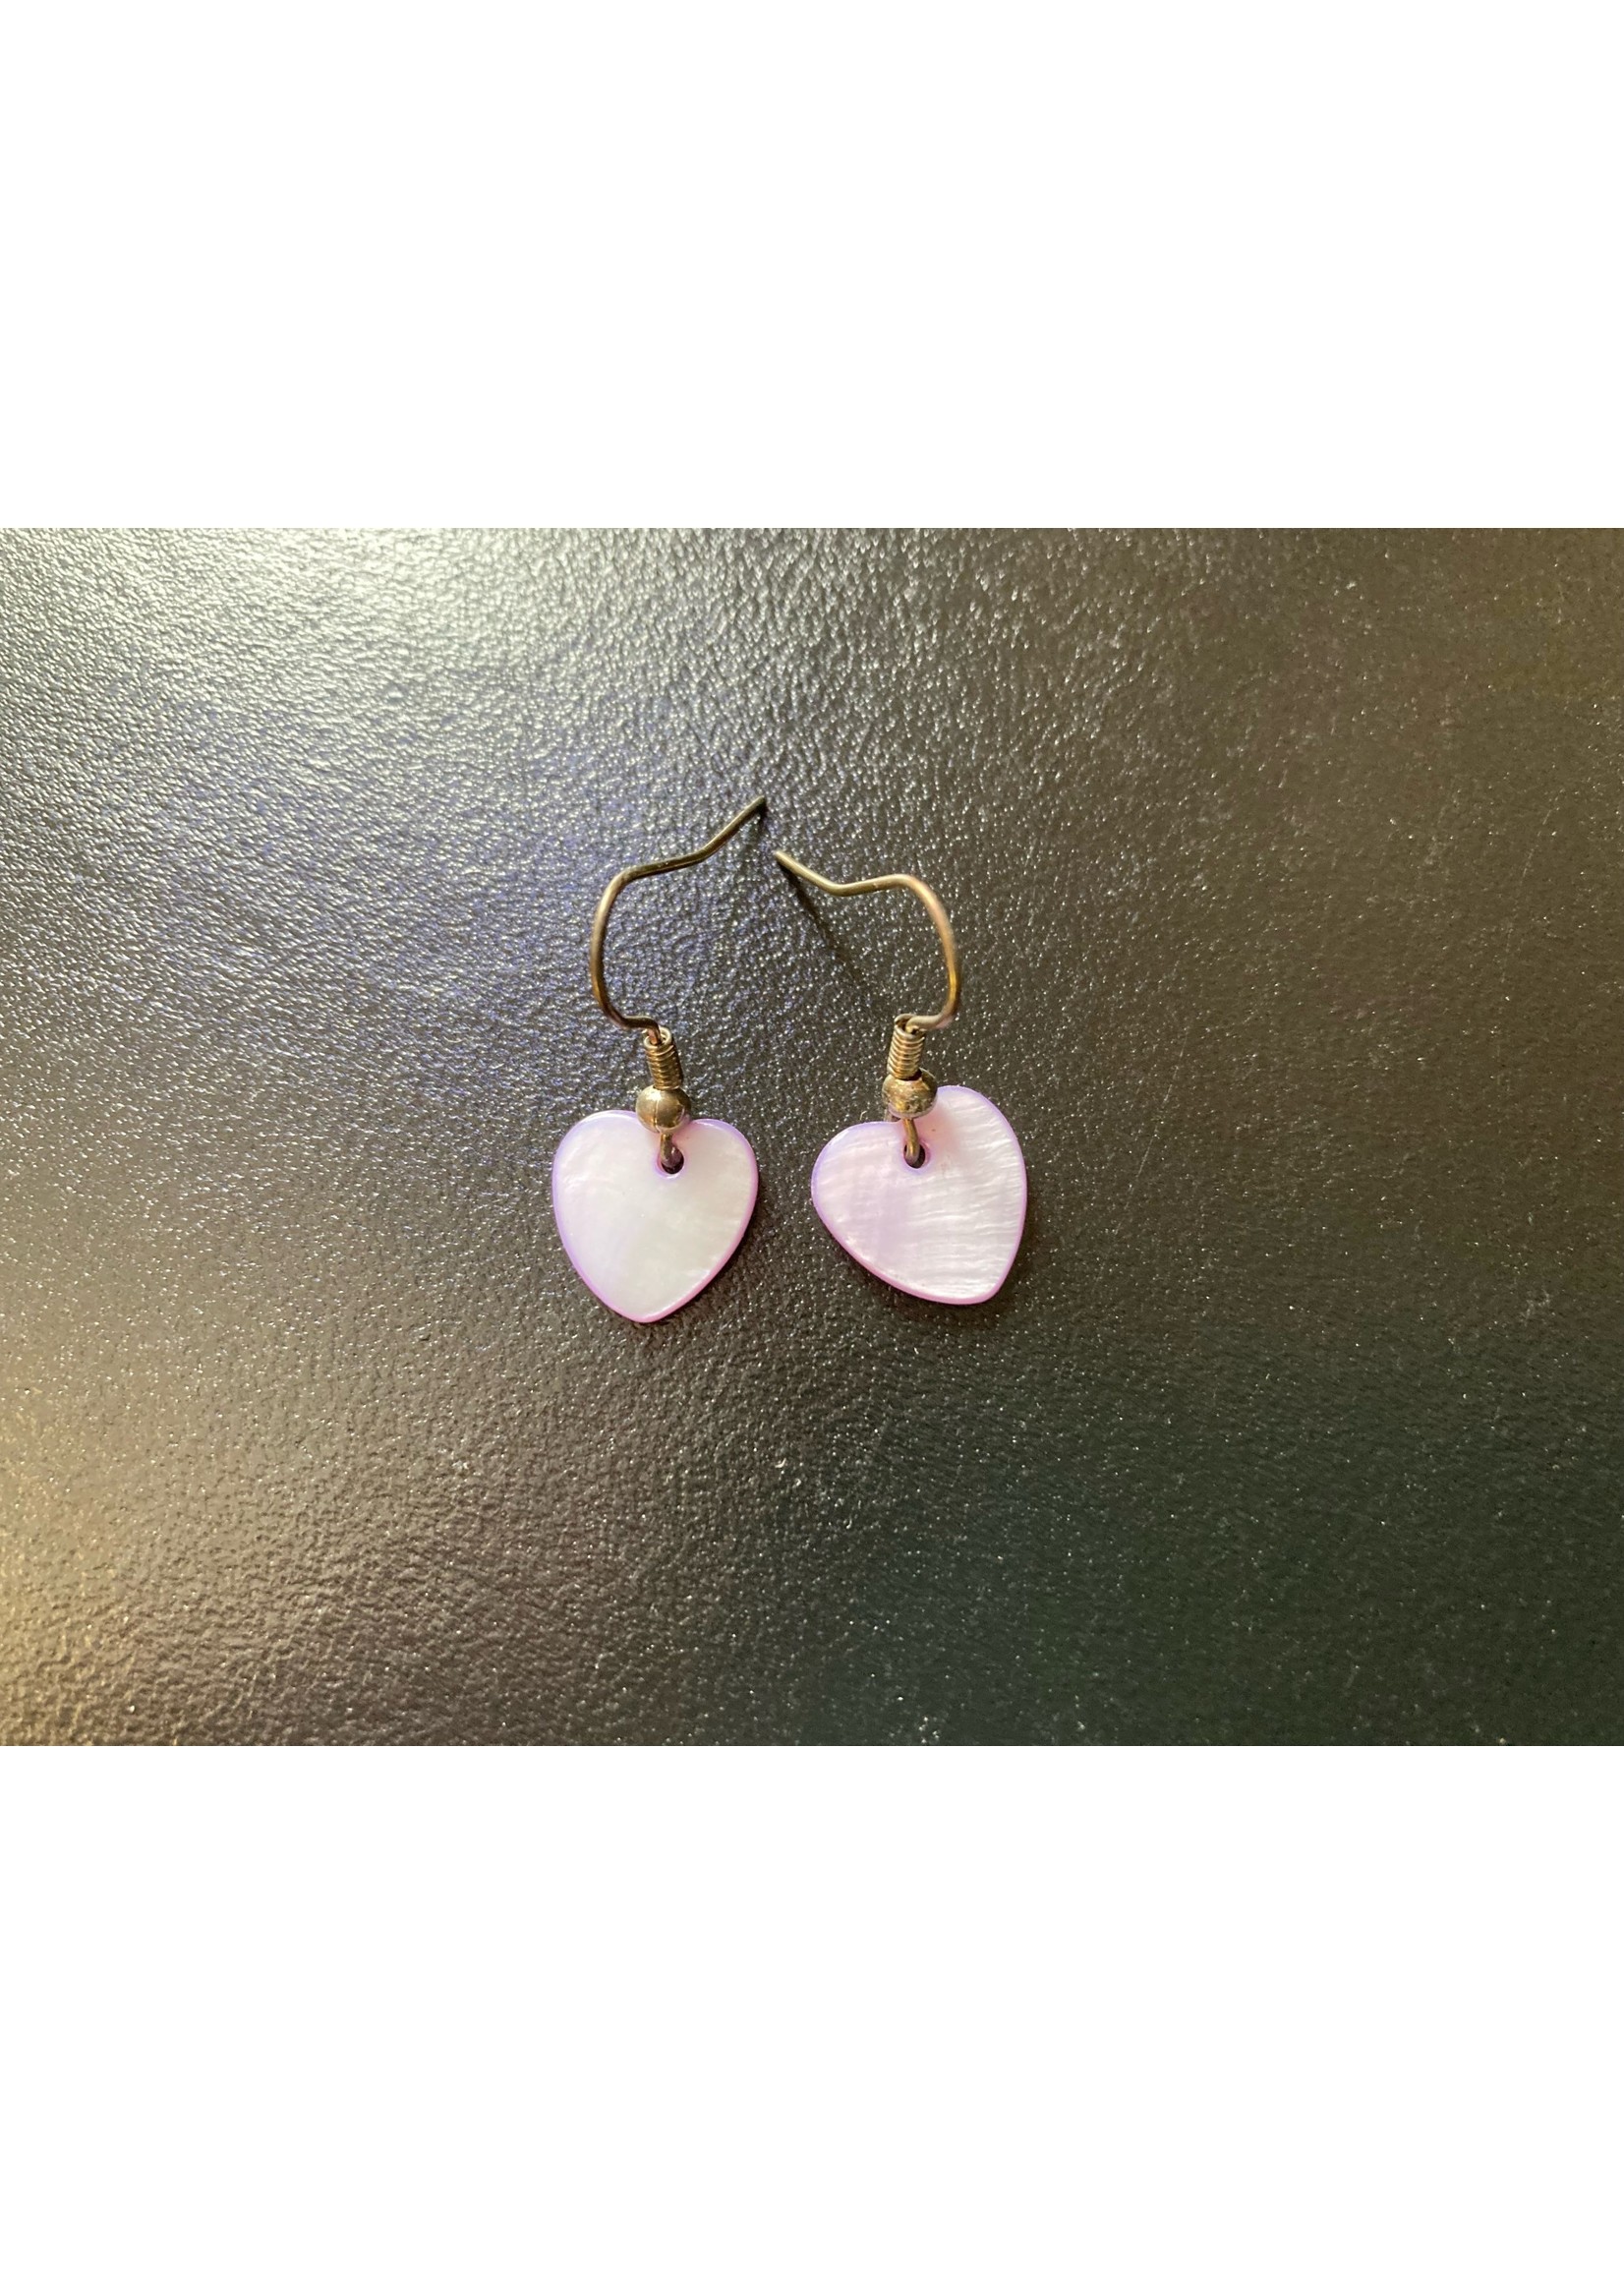 Earrings Lavender Heart